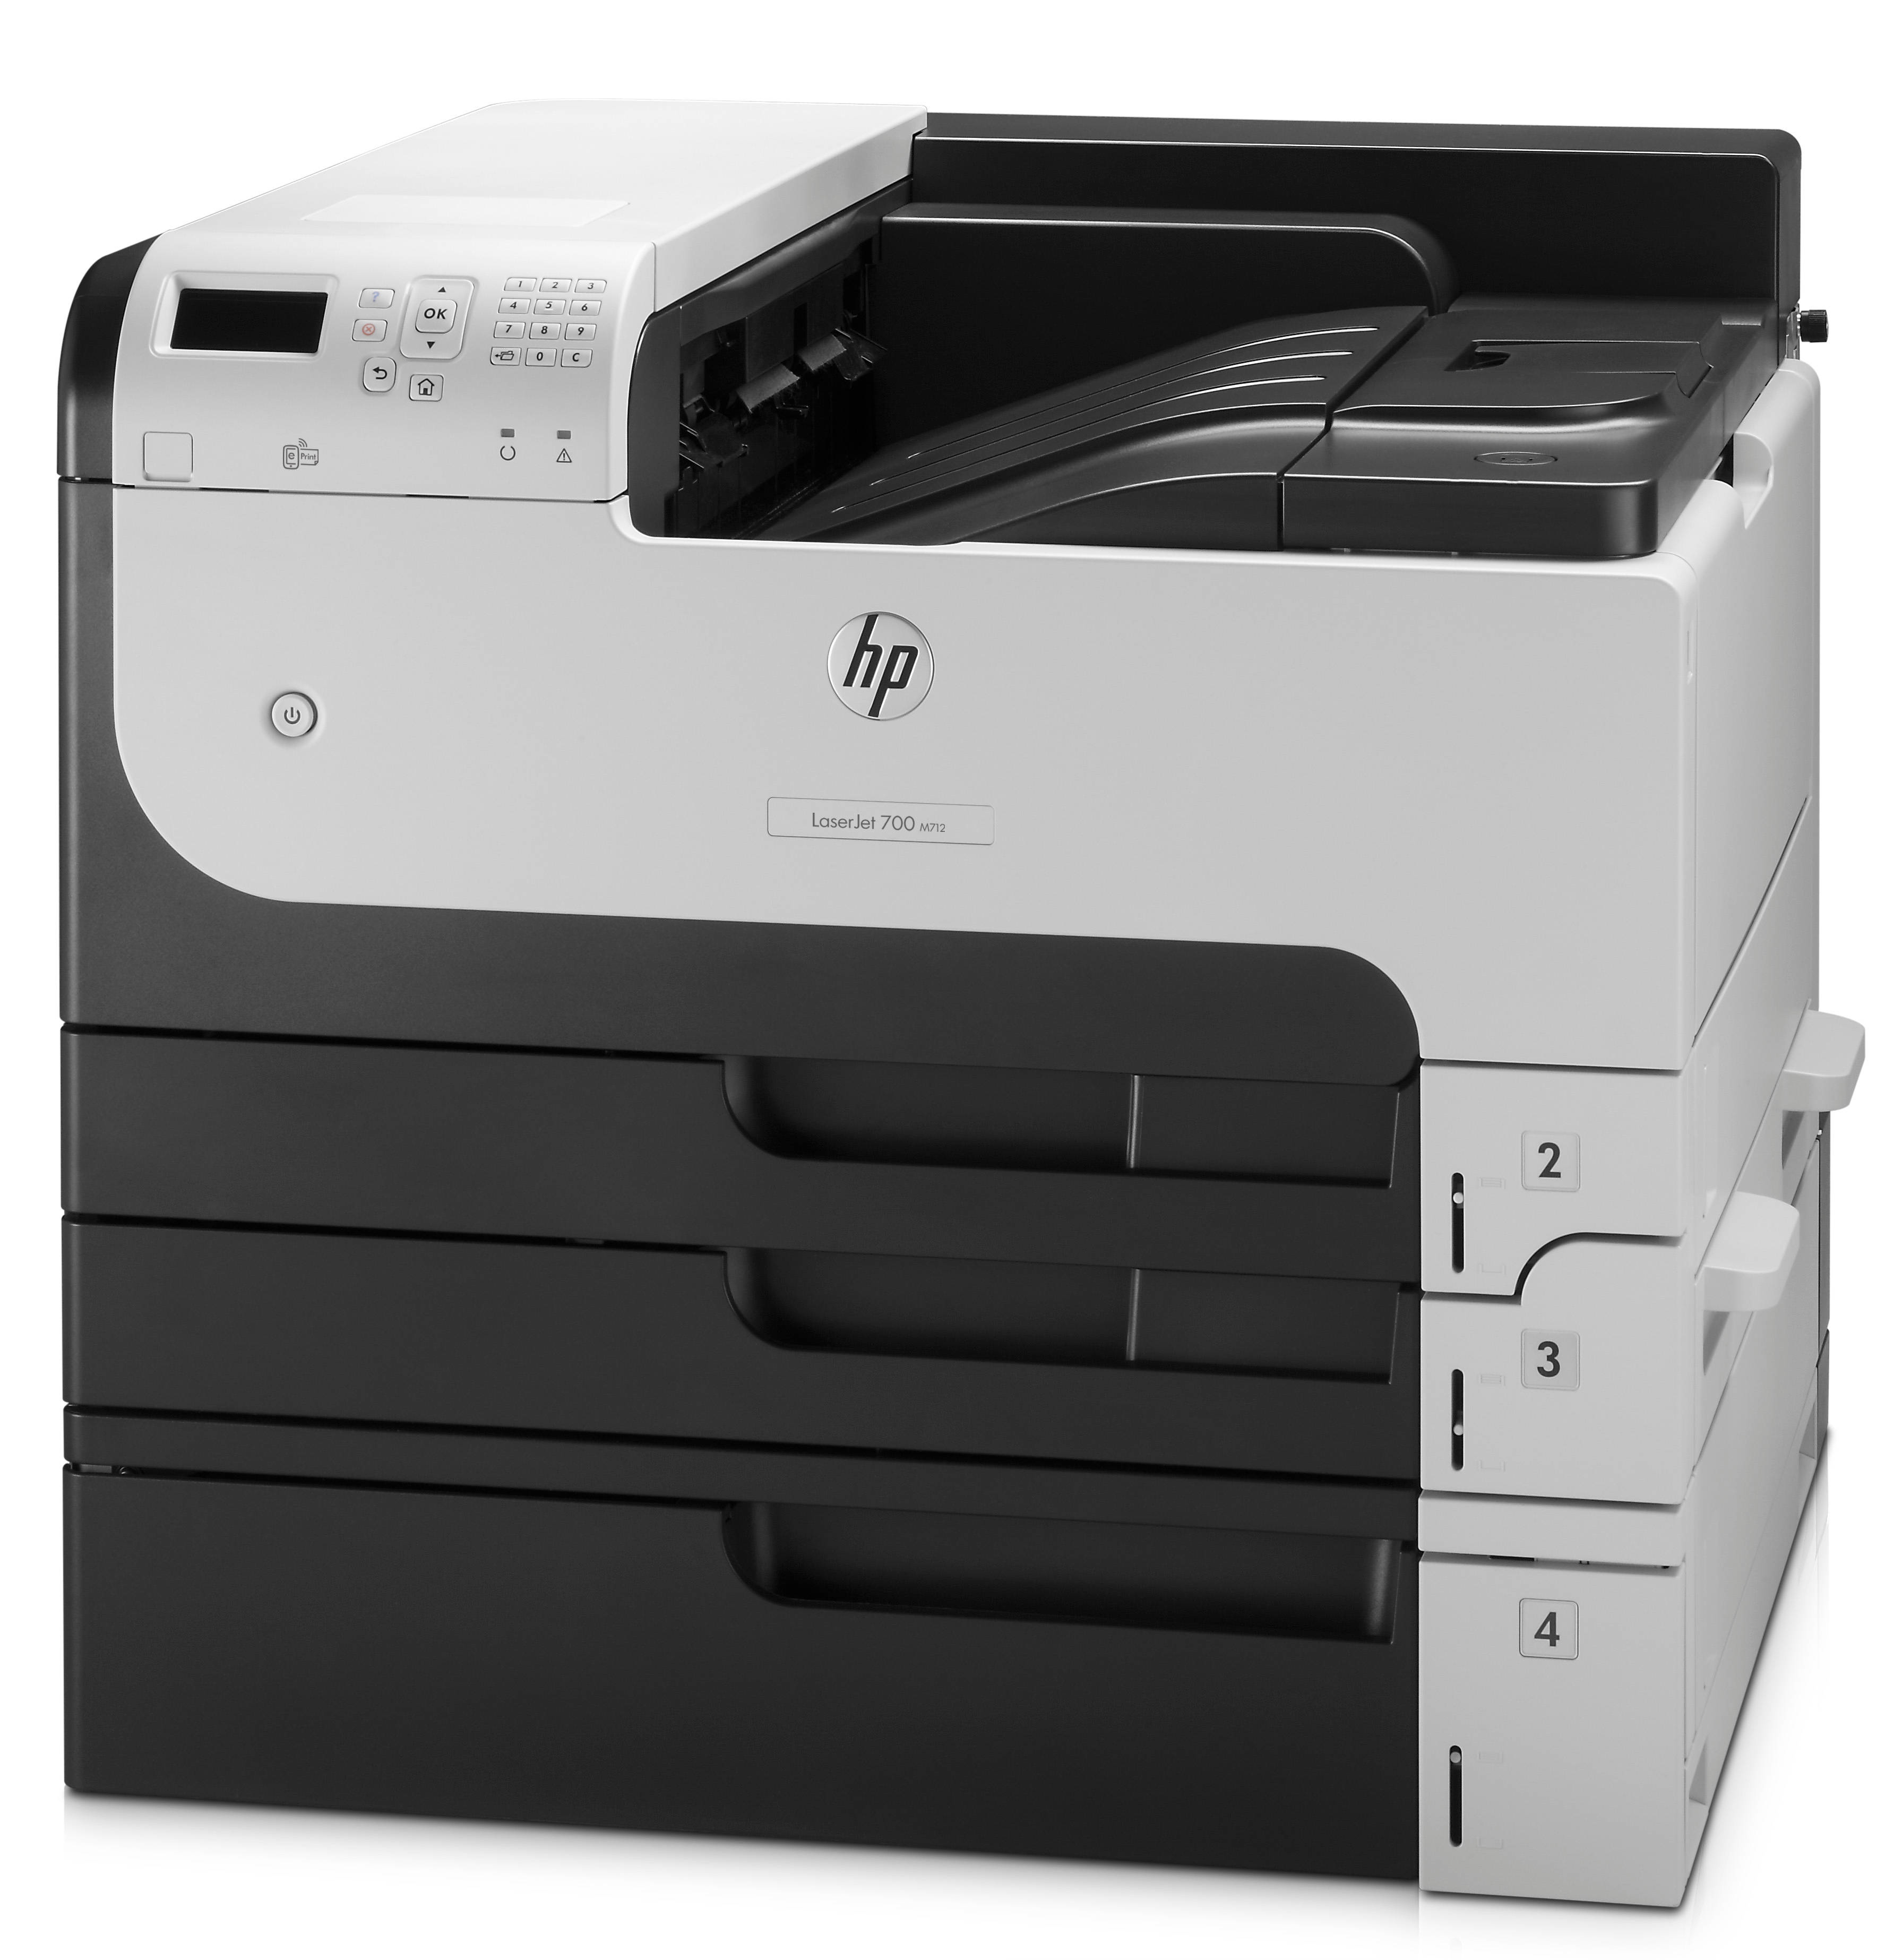 hp printer utility for windows